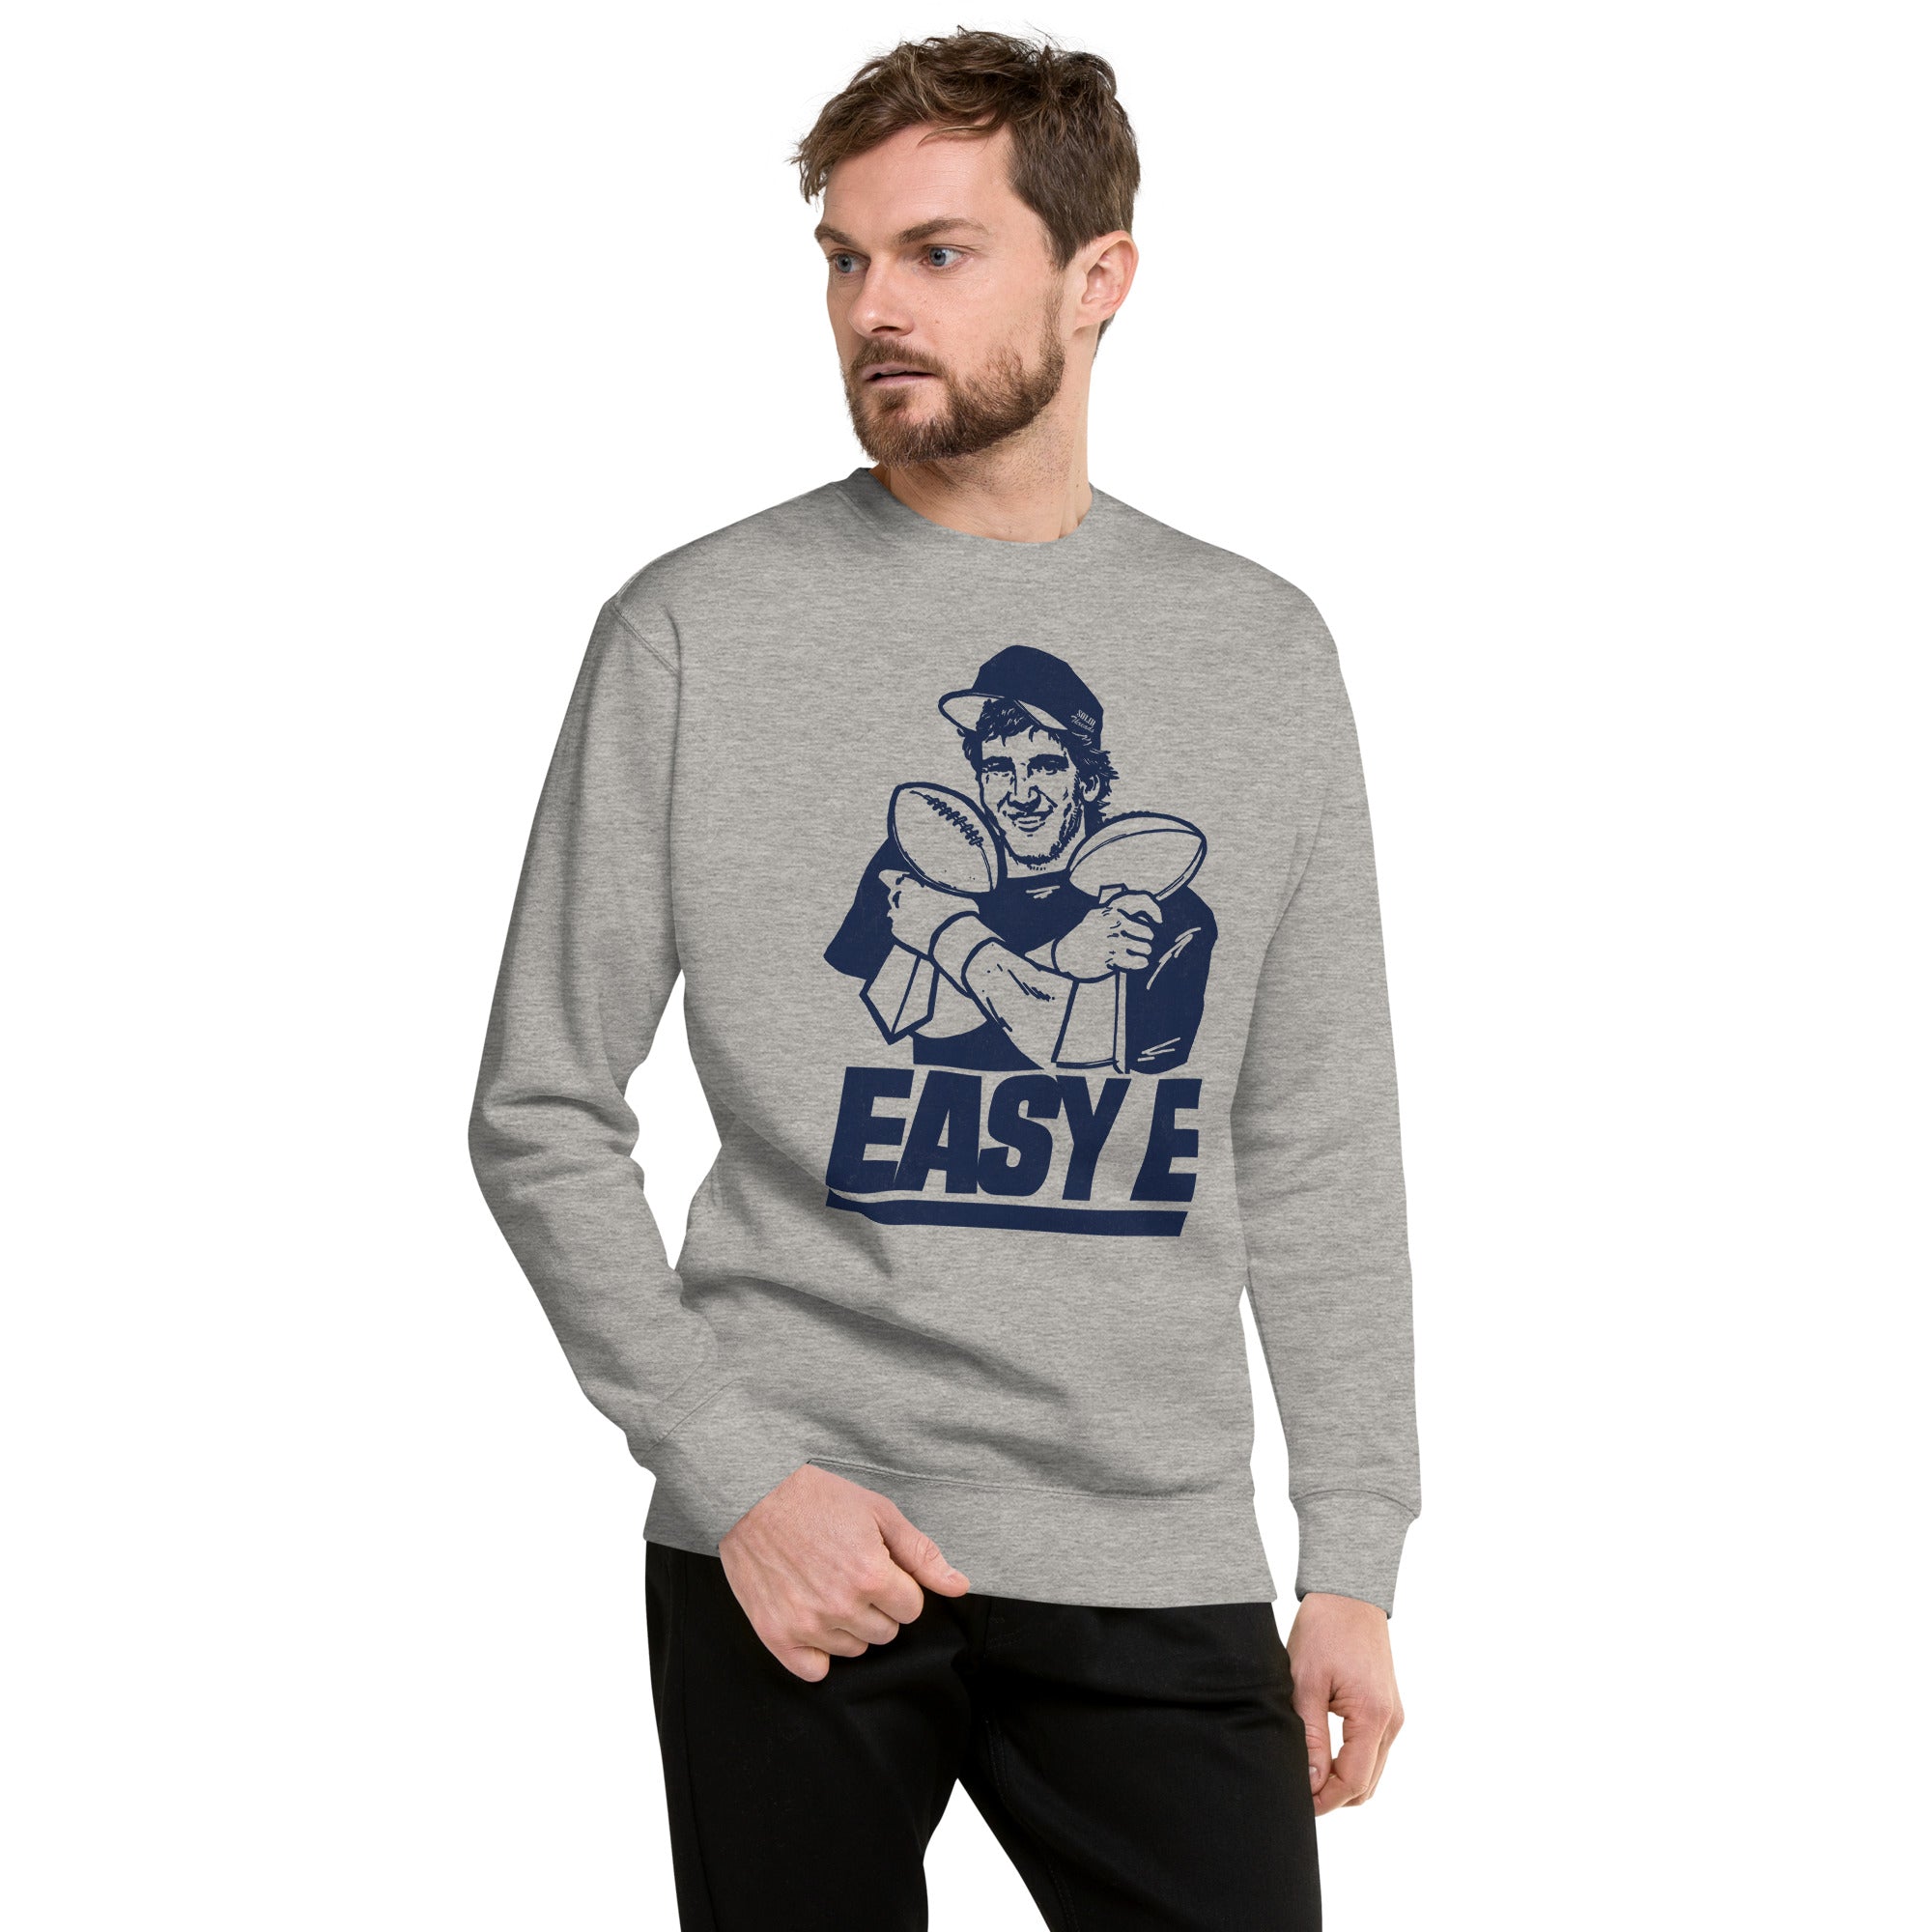 Men's Easy E Vintage Classic Sweatshirt | Funny Ny Giants Fleece | Solid Threads